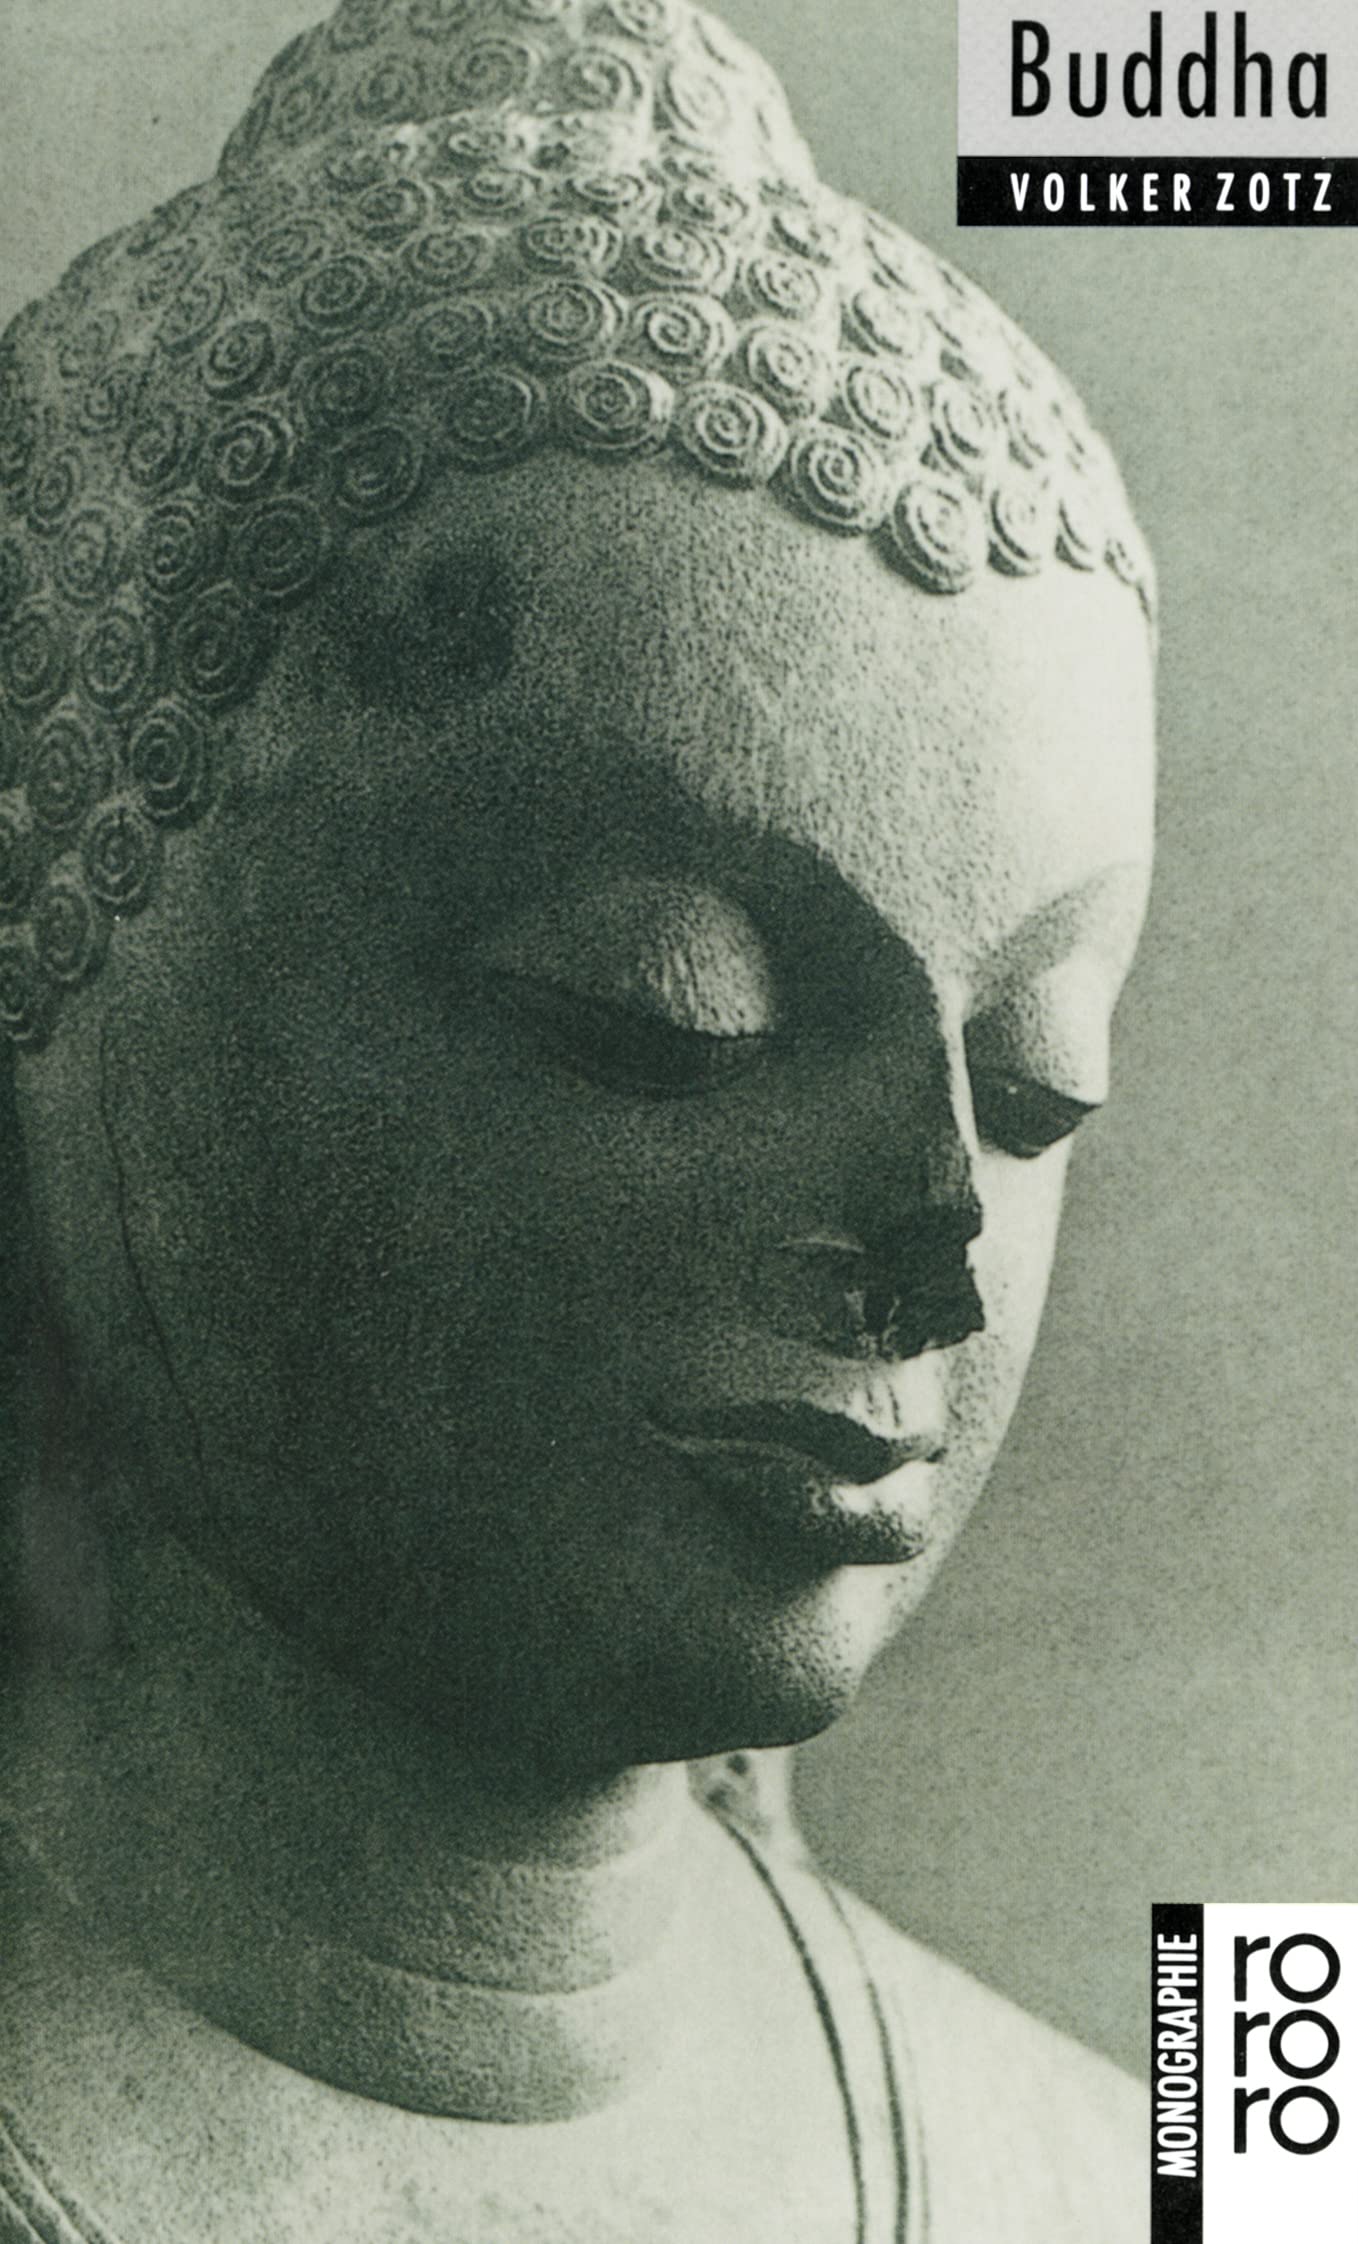 Buddha (Zotz, Volker)